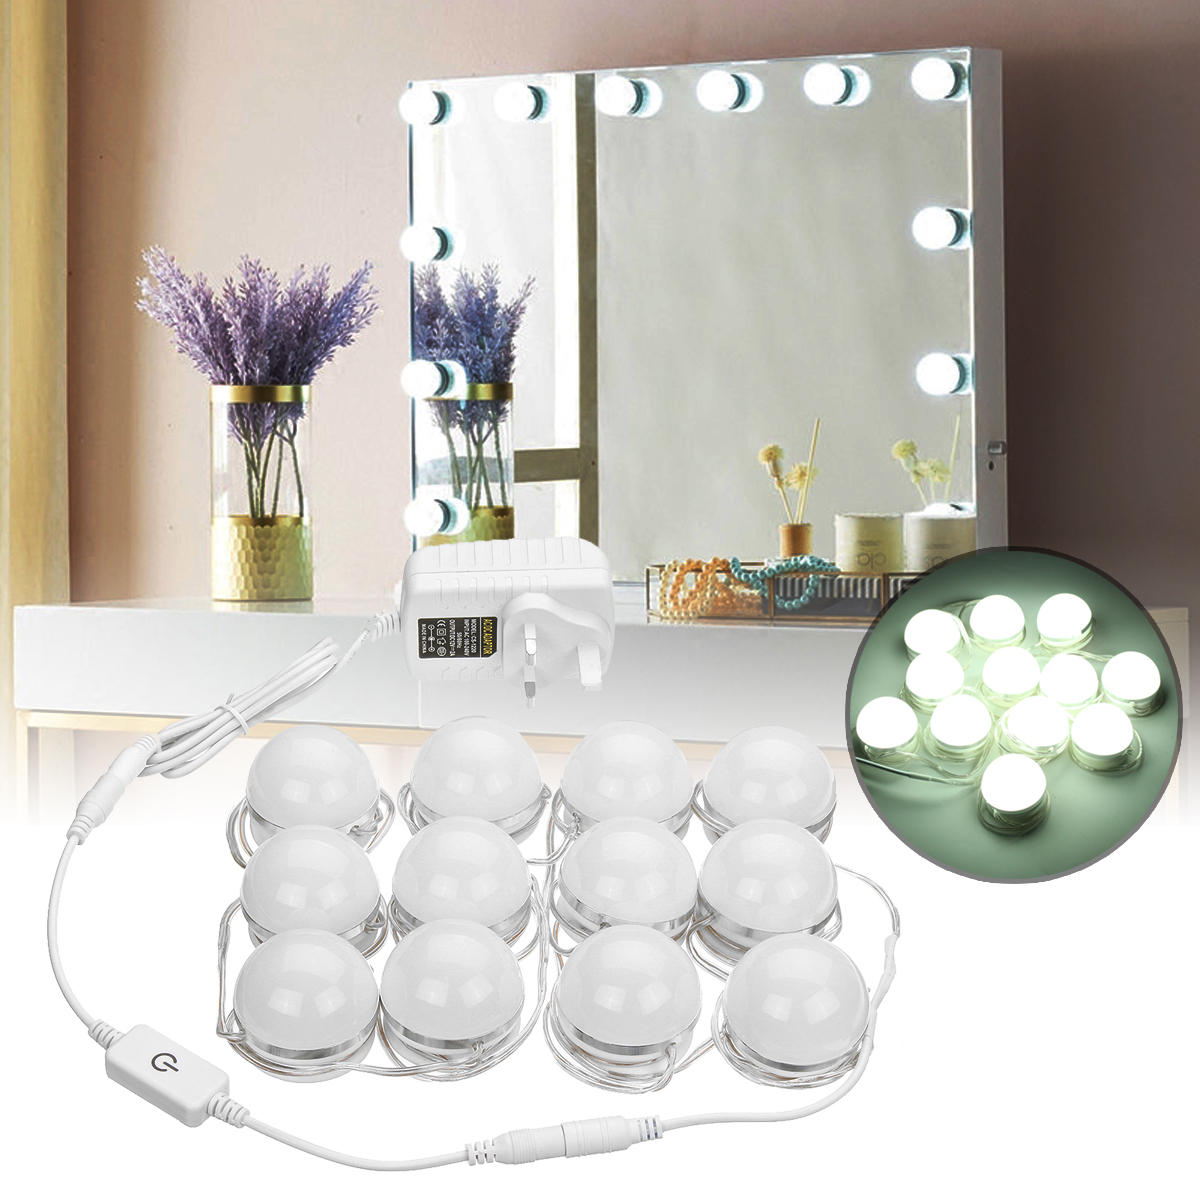 

AC100-240V 24W 12PC Hollywood Style LED Vanity Makeup Dressing Table Mirror Light Kit + UK Plug